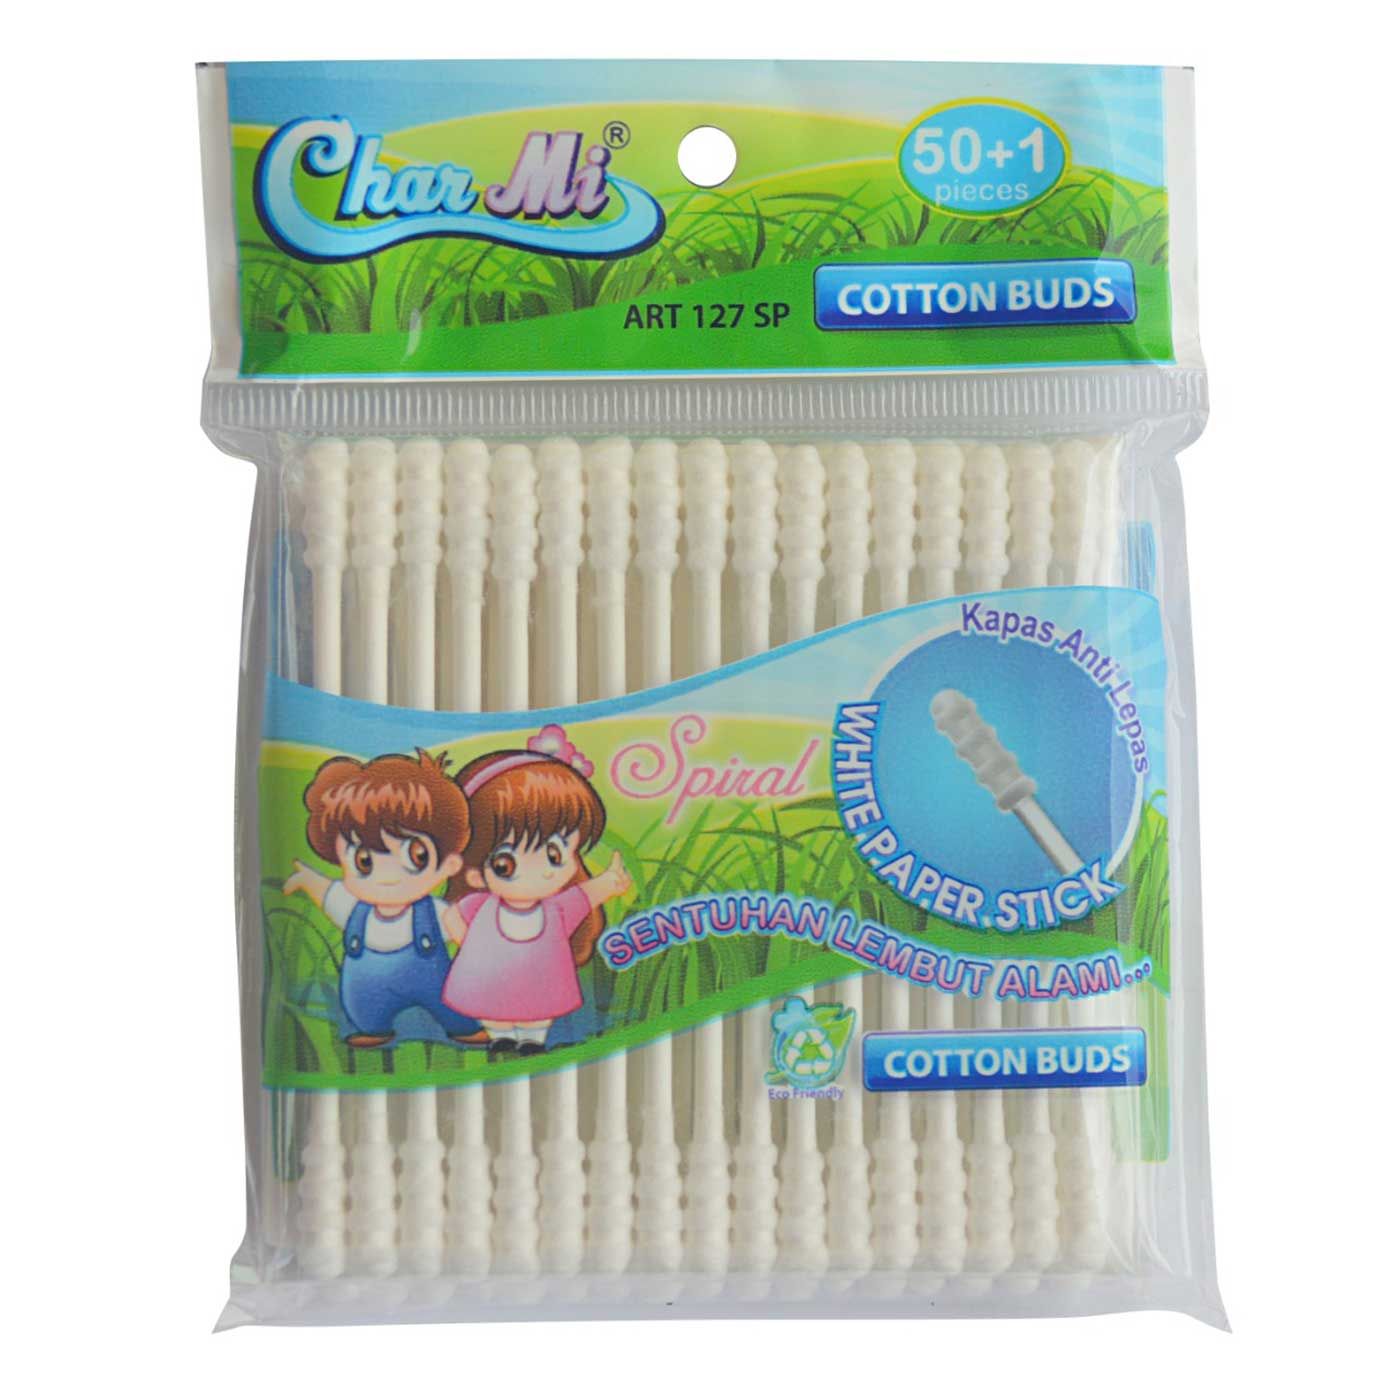 Charmi Cotton Buds 127 SP - 1